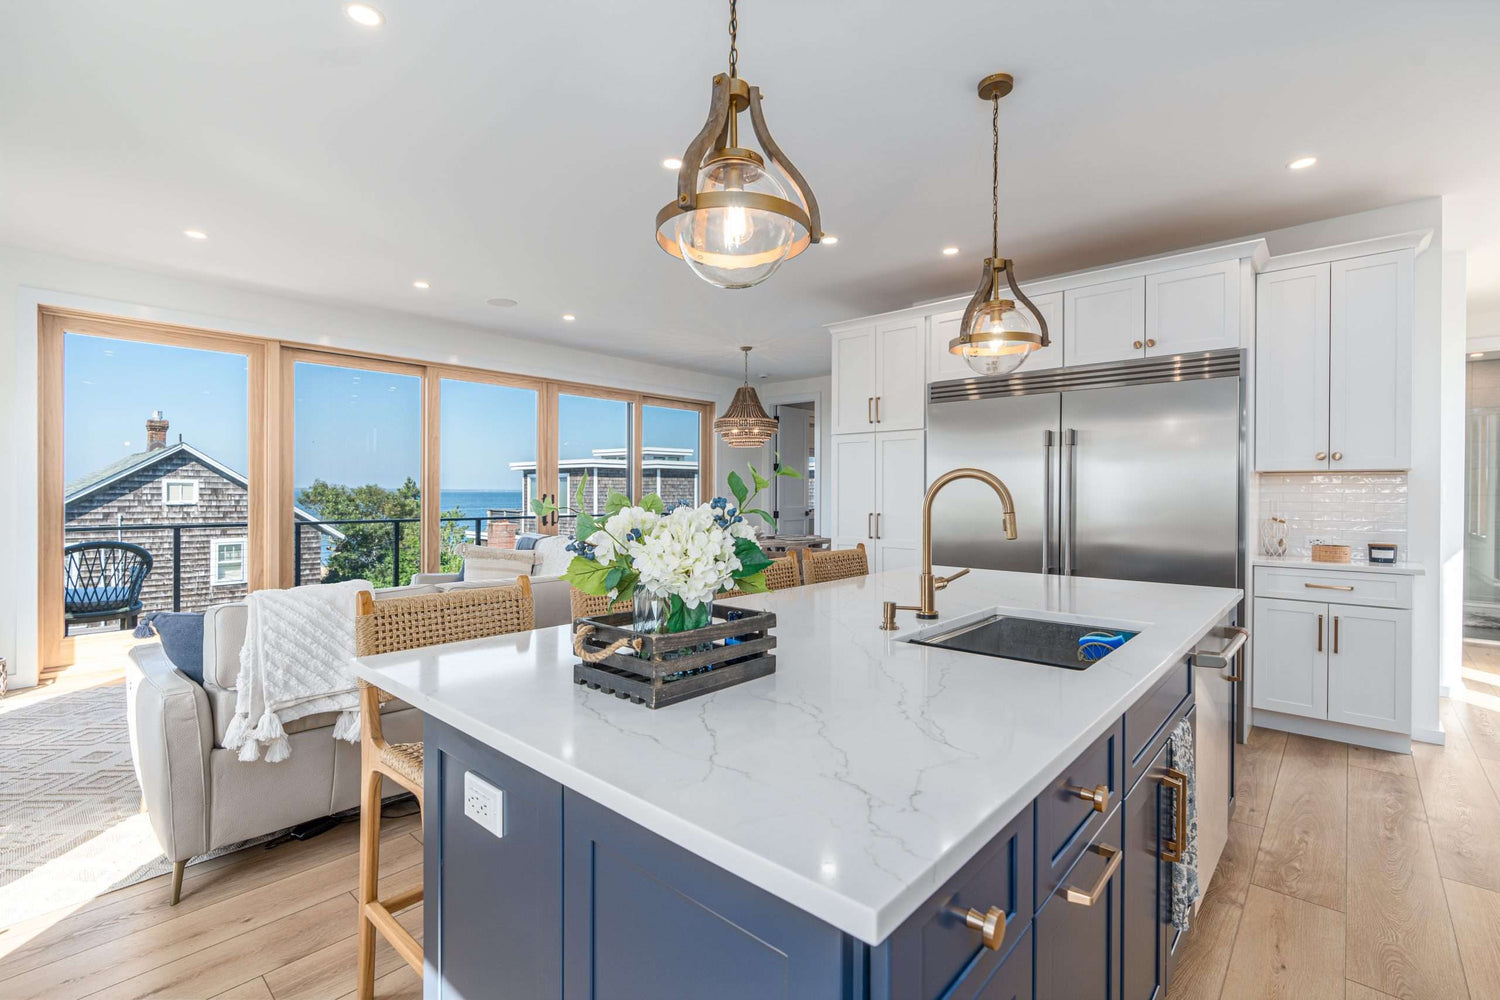 Coastal Blue and white kitchen with gold accents and white quartz countertops. Fabuwood Allure Galaxy Indigo Island